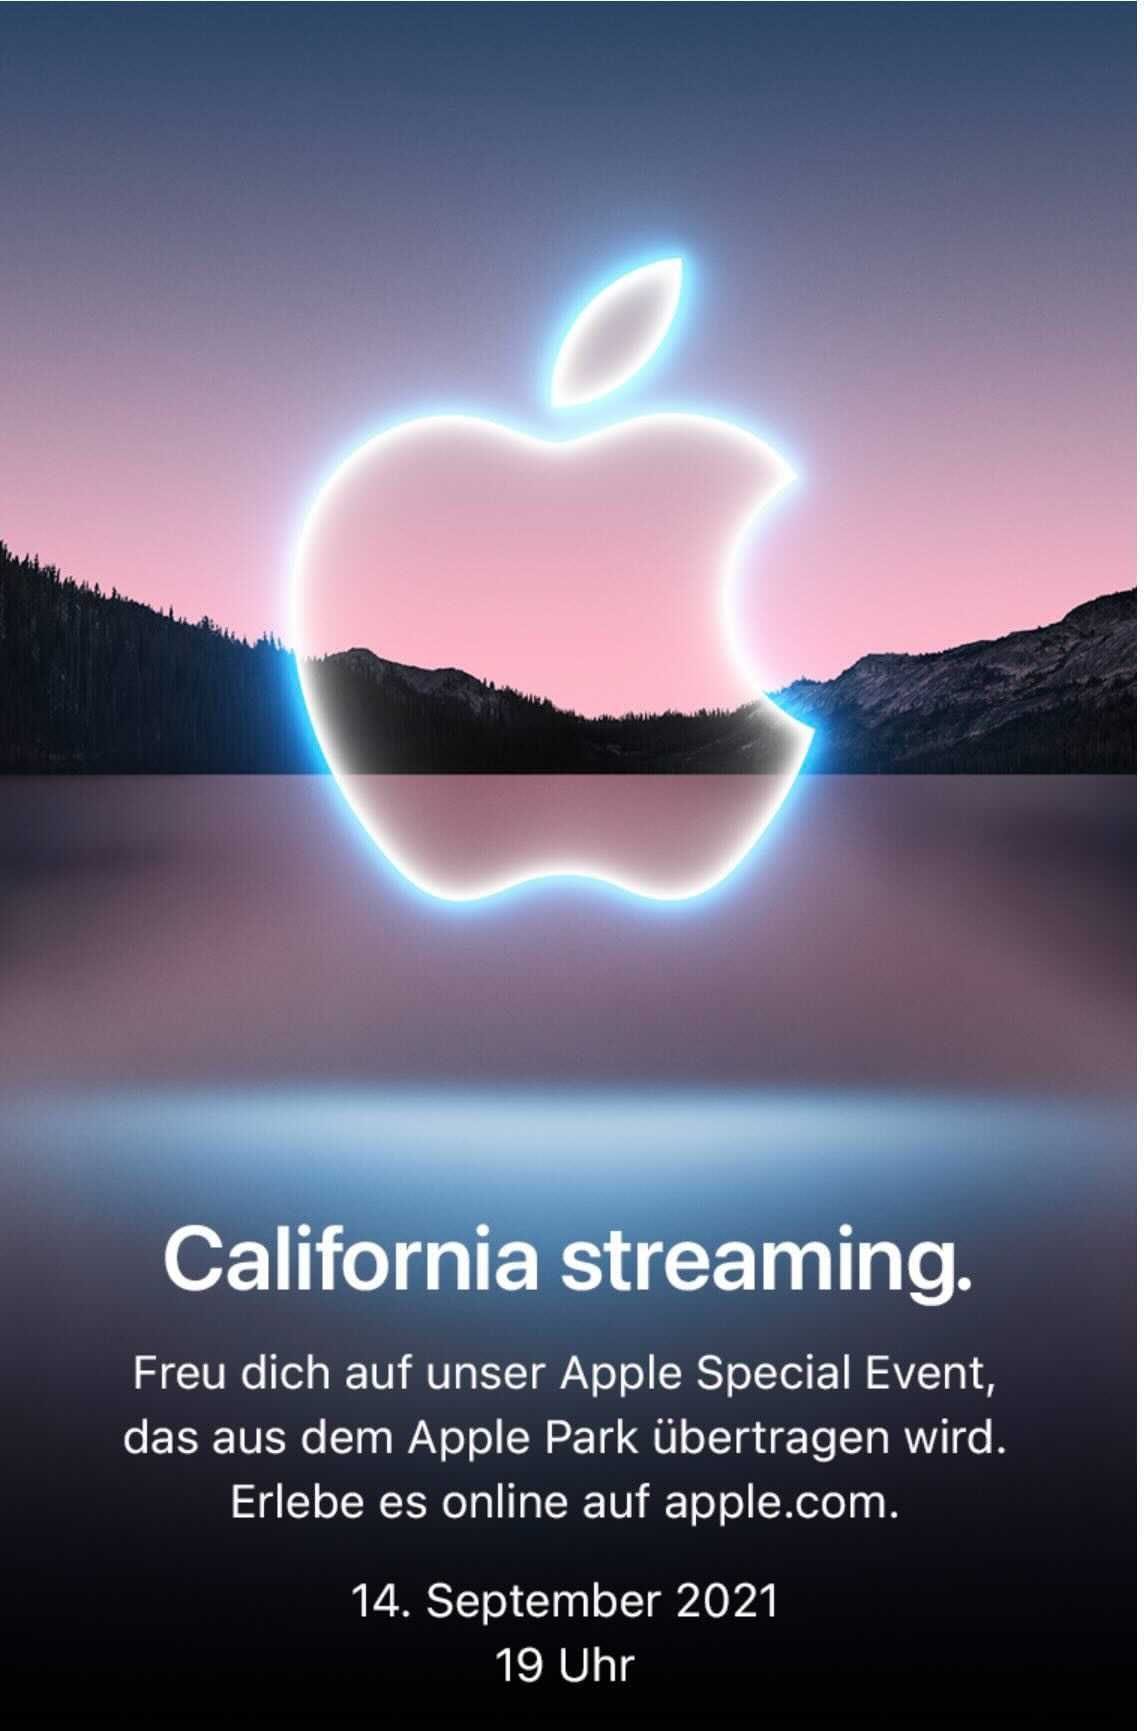 "California Streaming": So sieht die Einladung aus.